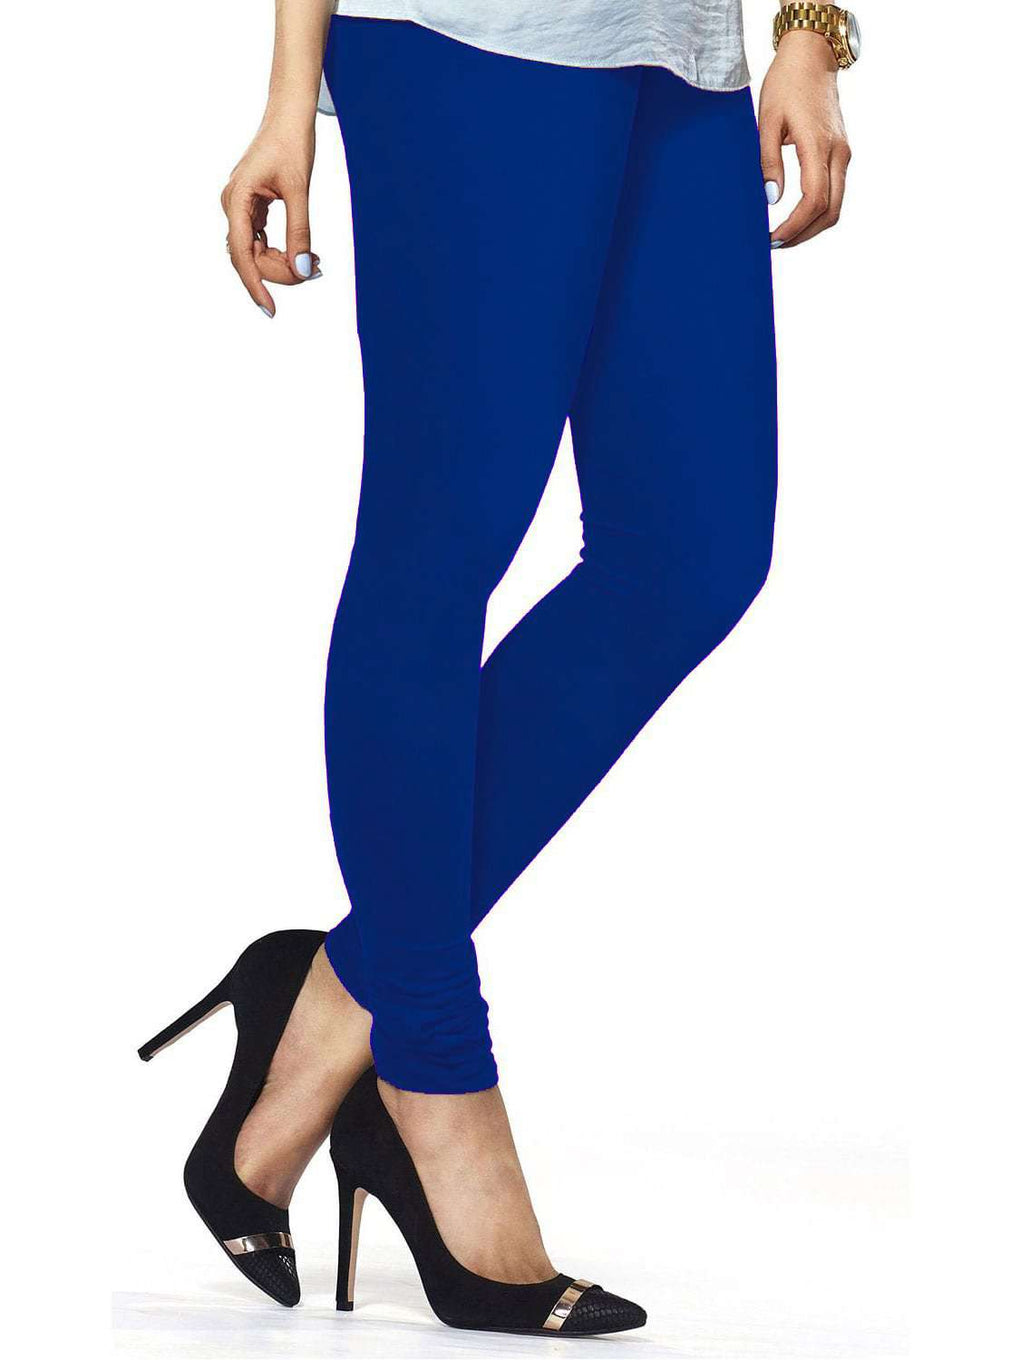 Royal Blue Viscose Ankle Legging | leggings for women – The Pajama Factory